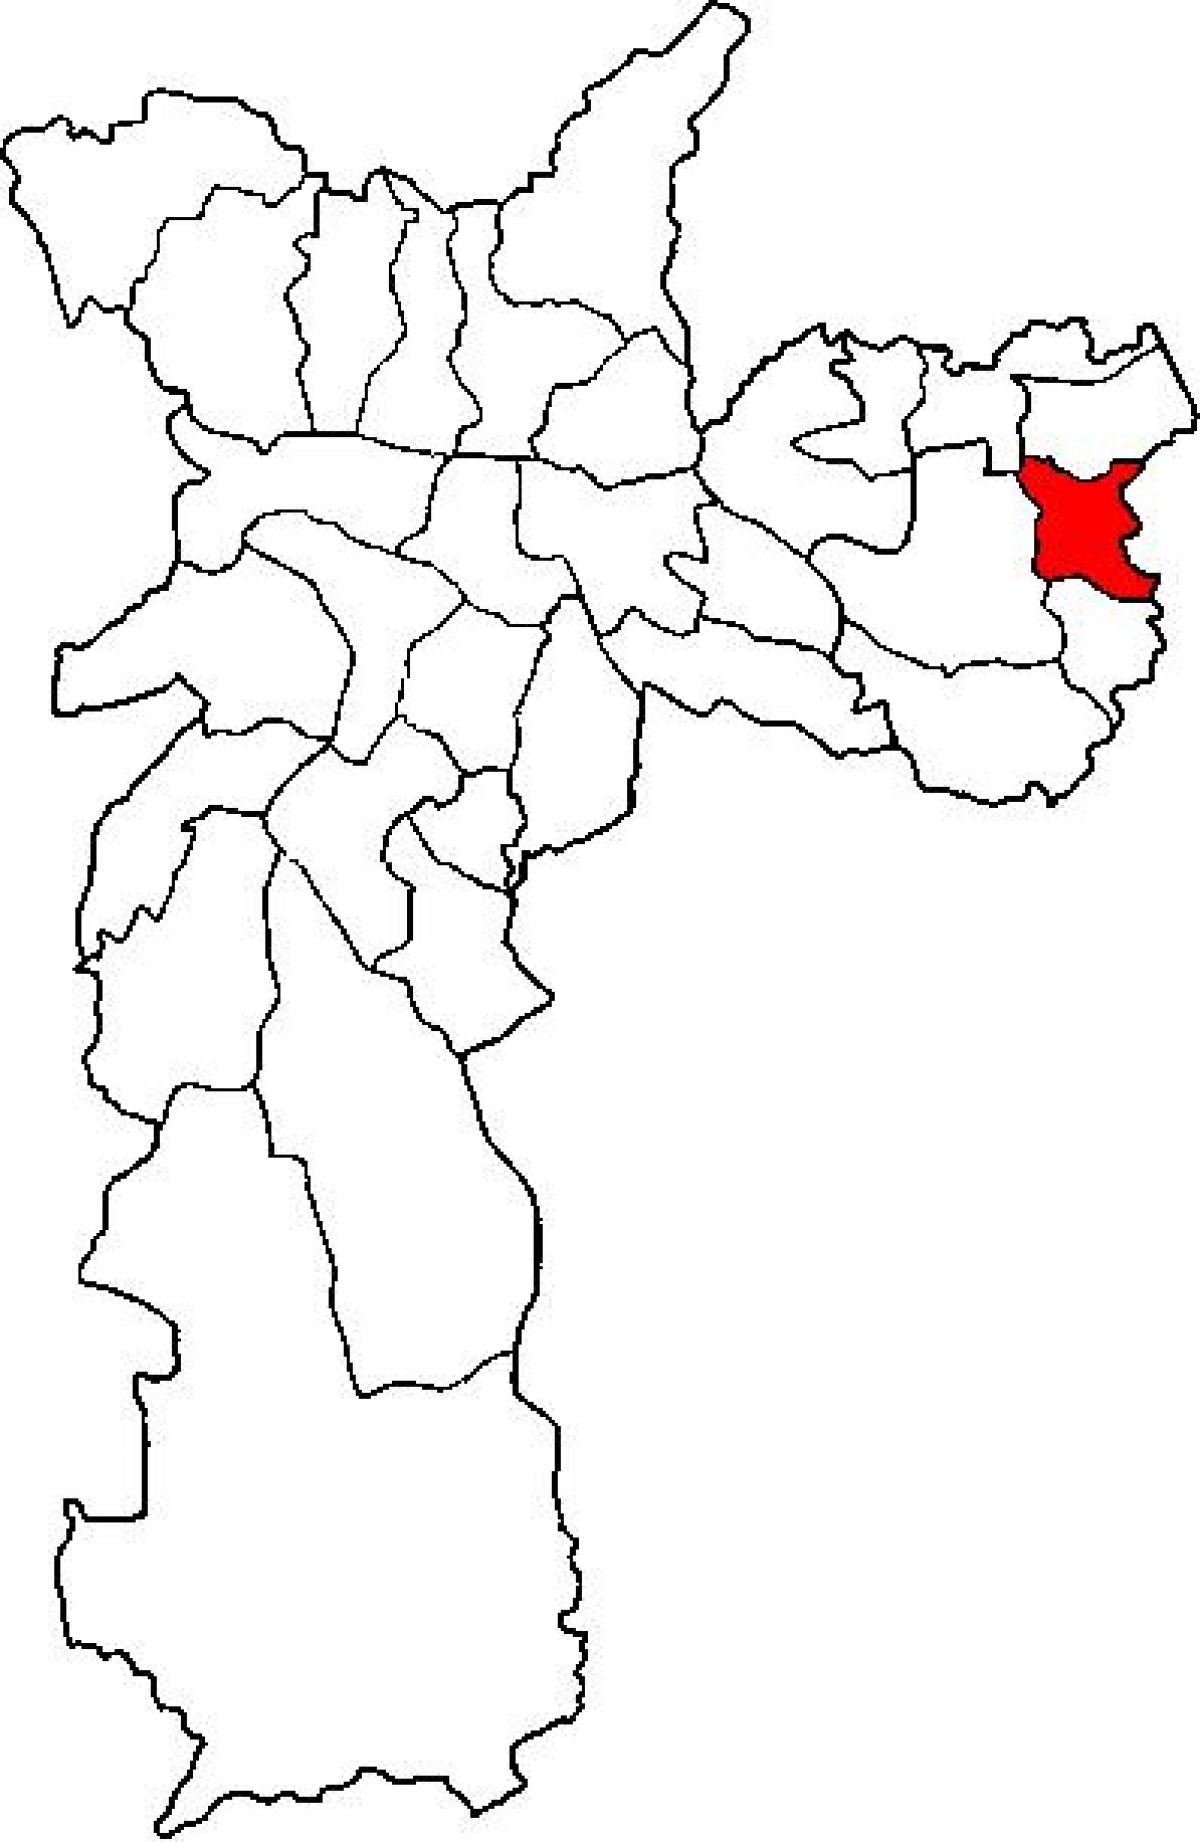 Kort over Guaianases sub-præfekturet São Paulo